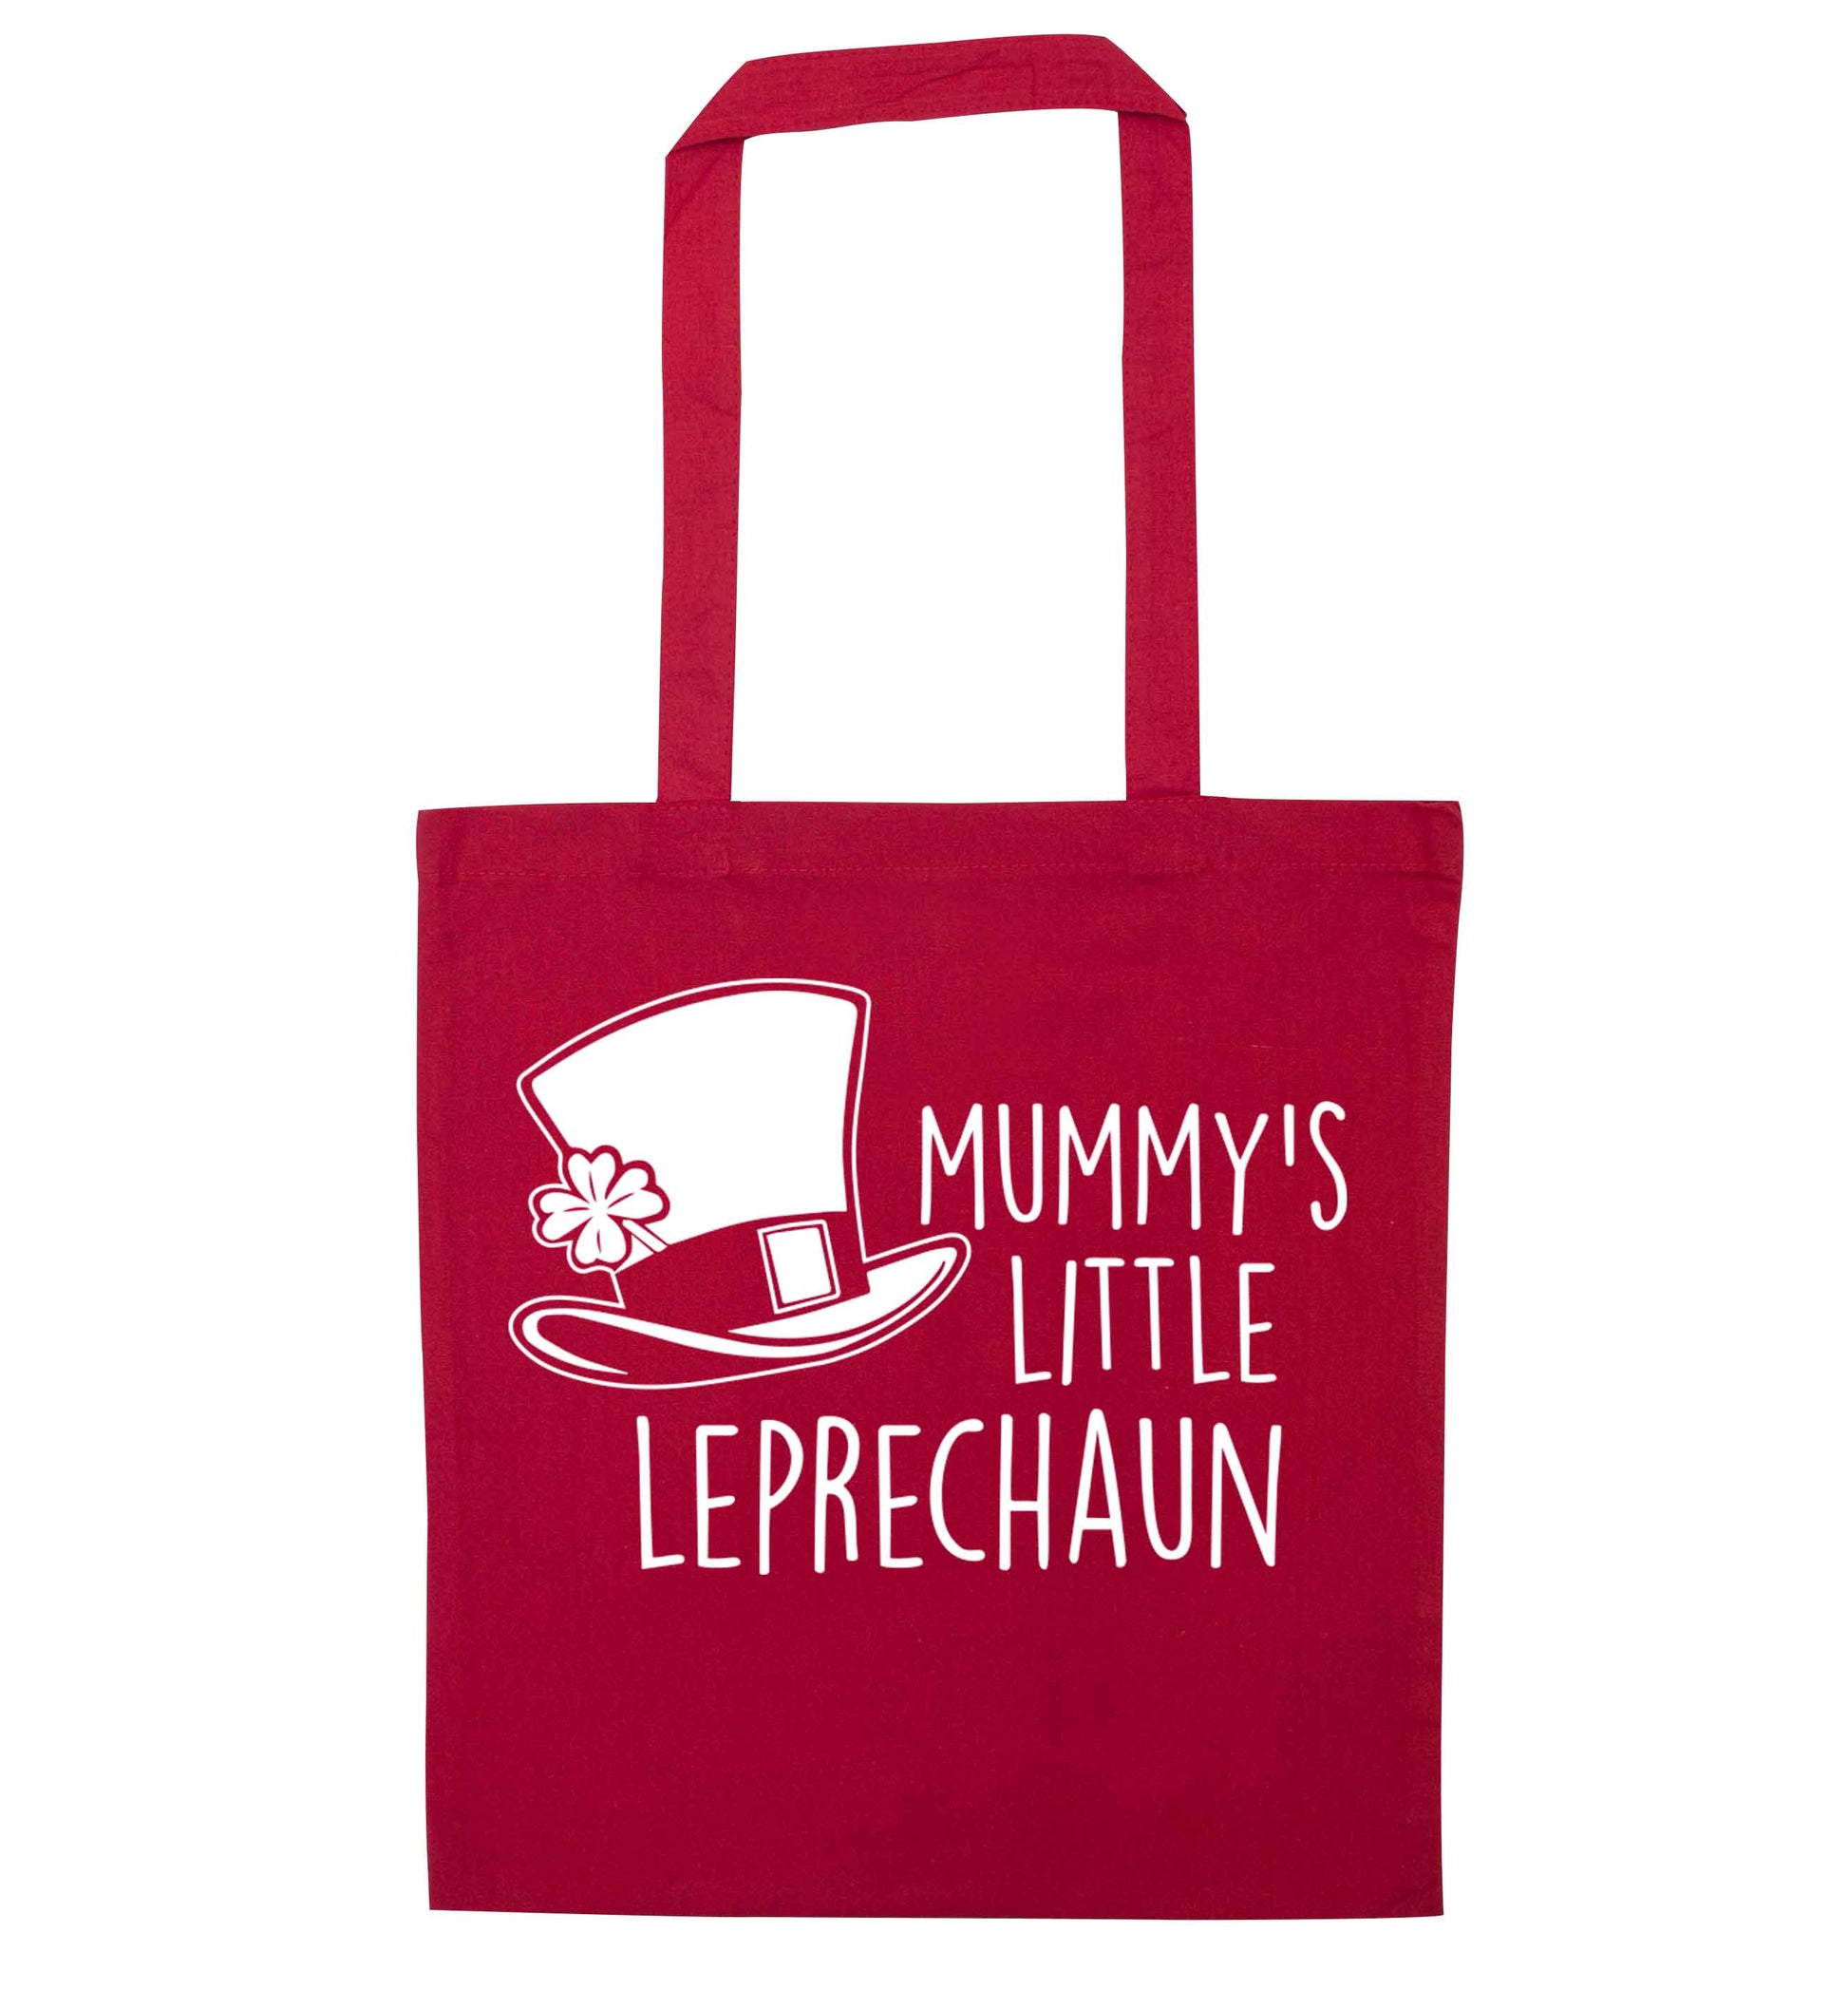 Mummy's little leprechaun red tote bag